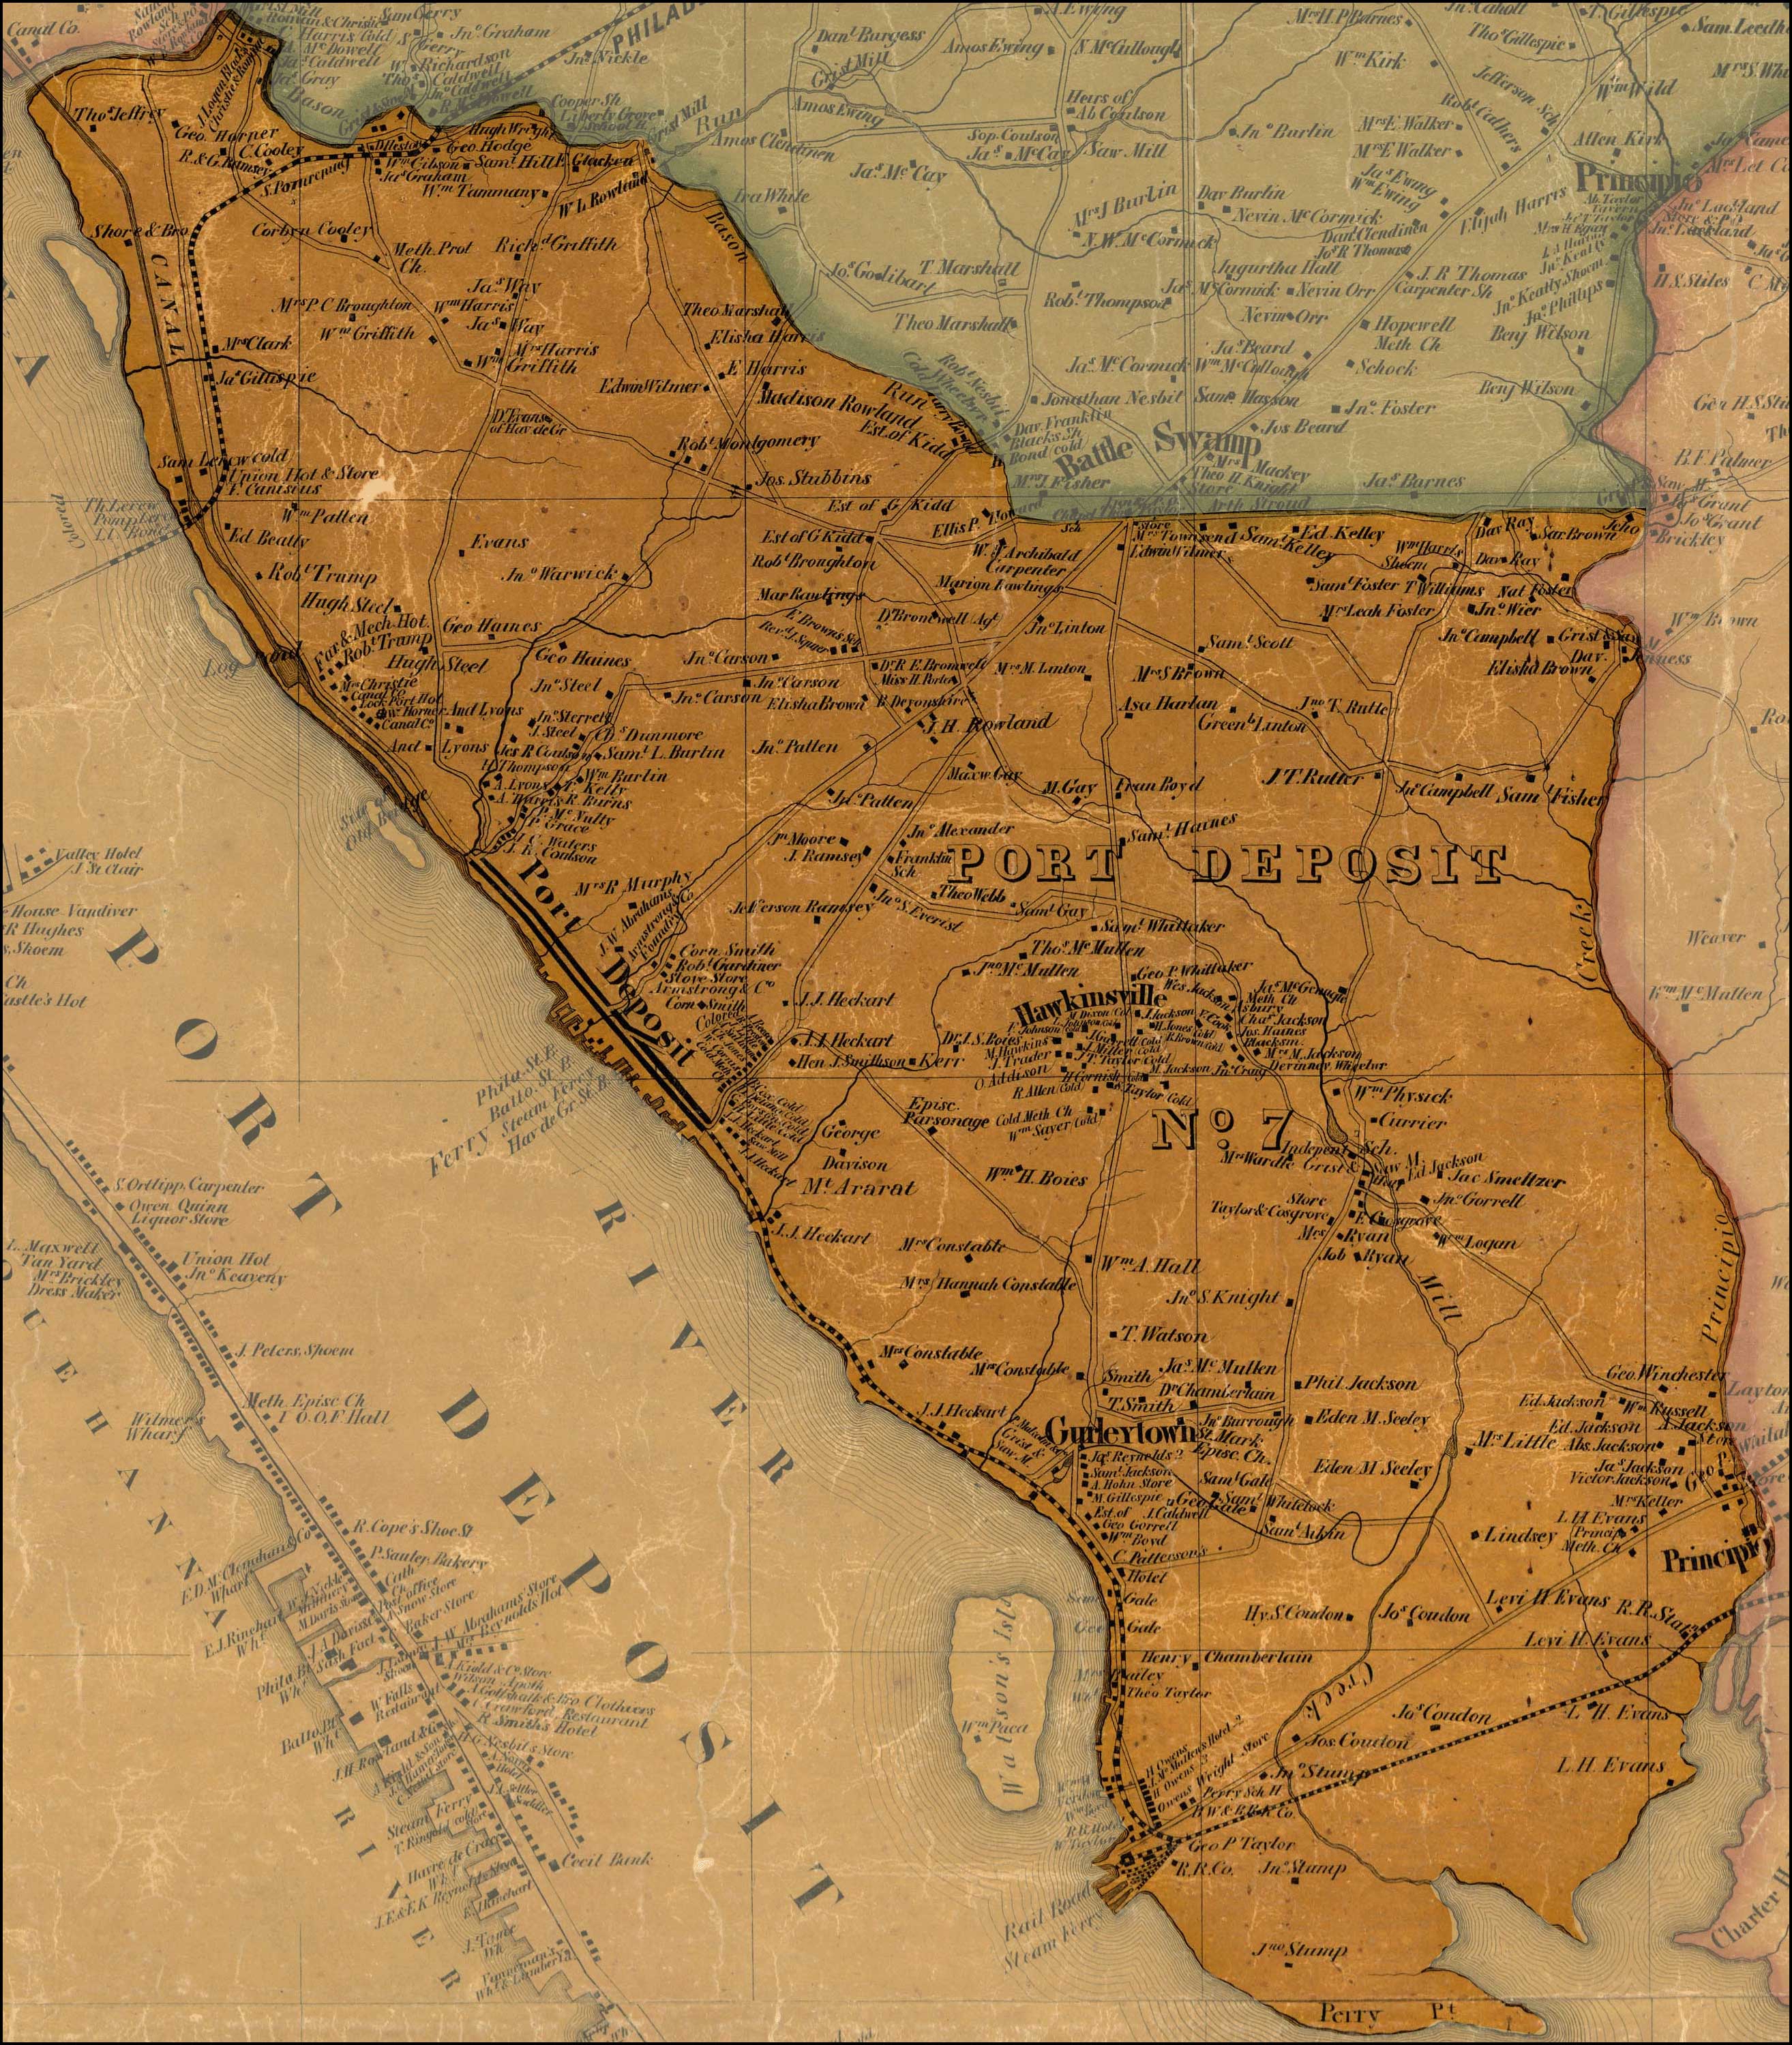 Simon J. Martenet, Map of Cecil County, 1858, Library of Congress, MSA SC 1213-1-462